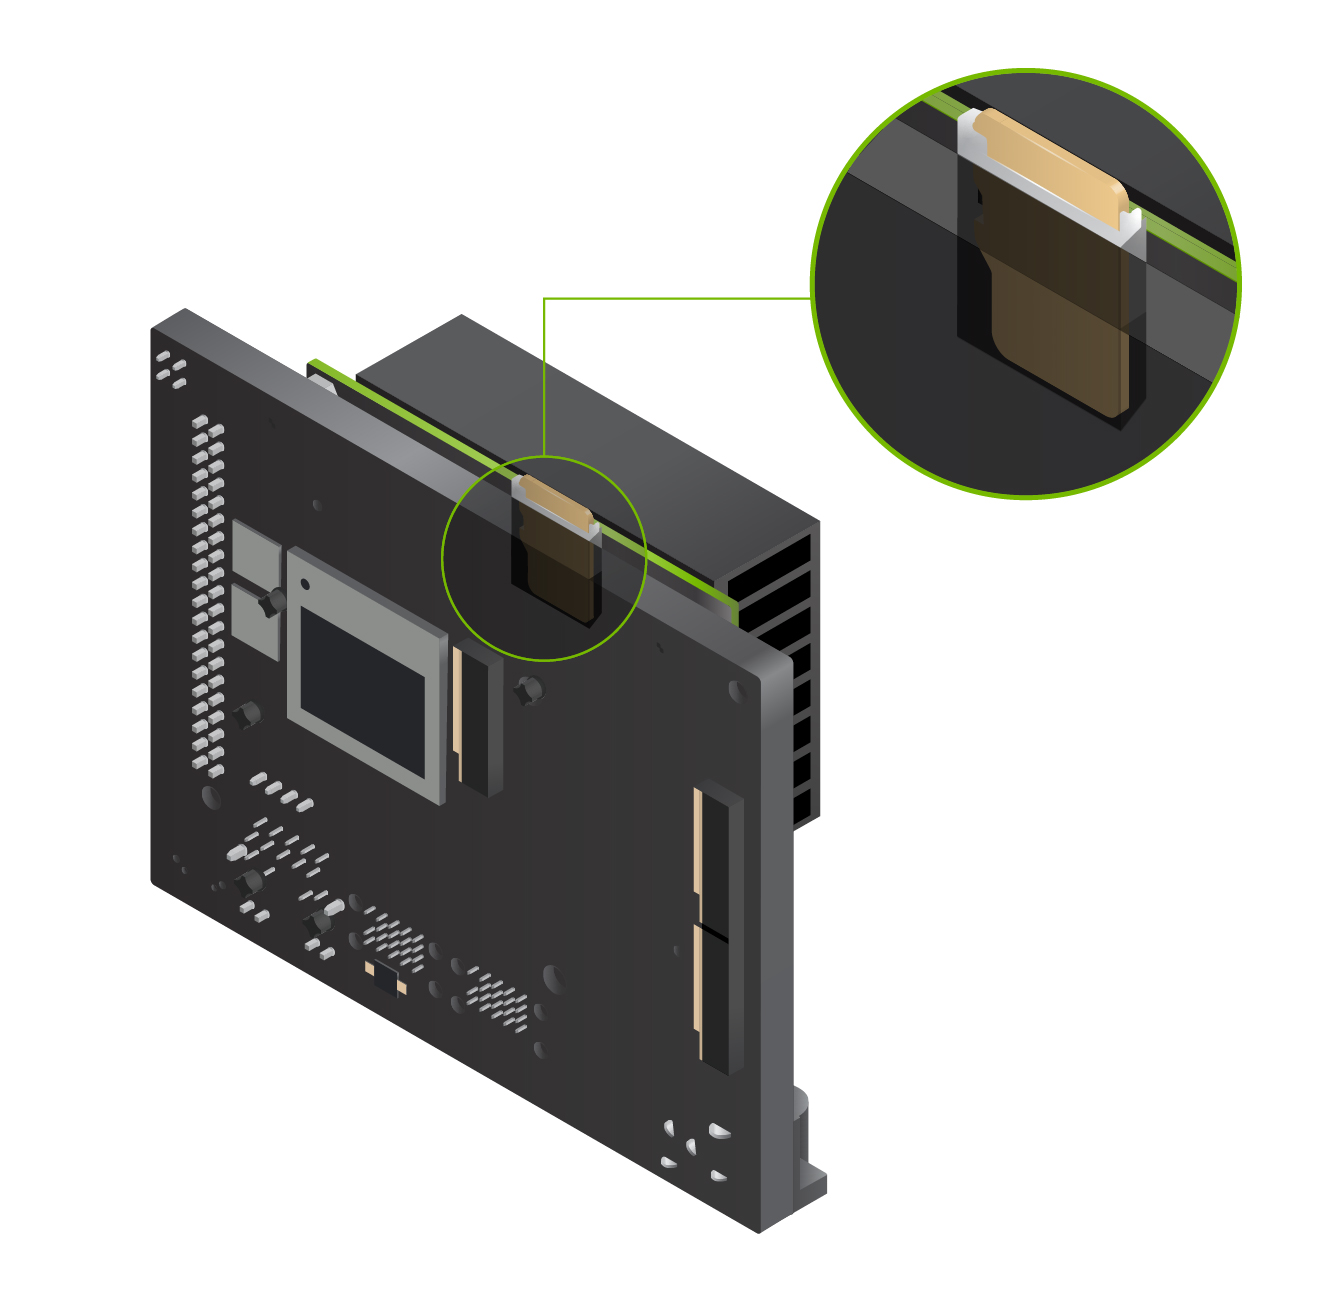 Jetson Orin Nano Developer Kit Getting Started Nvidia Developer